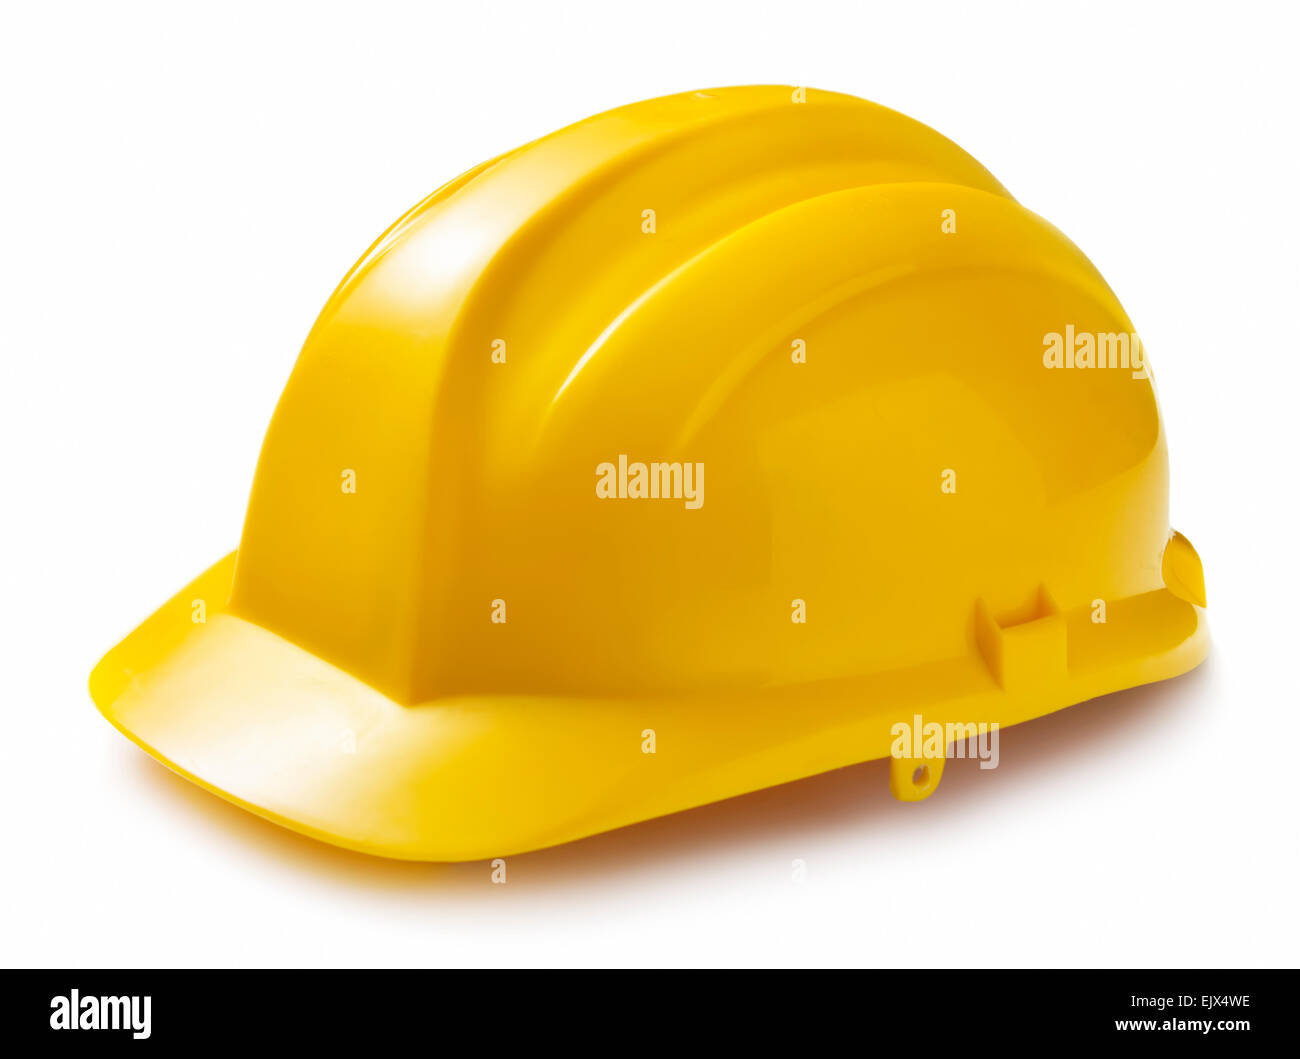 Yellow safety helmet on white background Stock Photo - Alamy